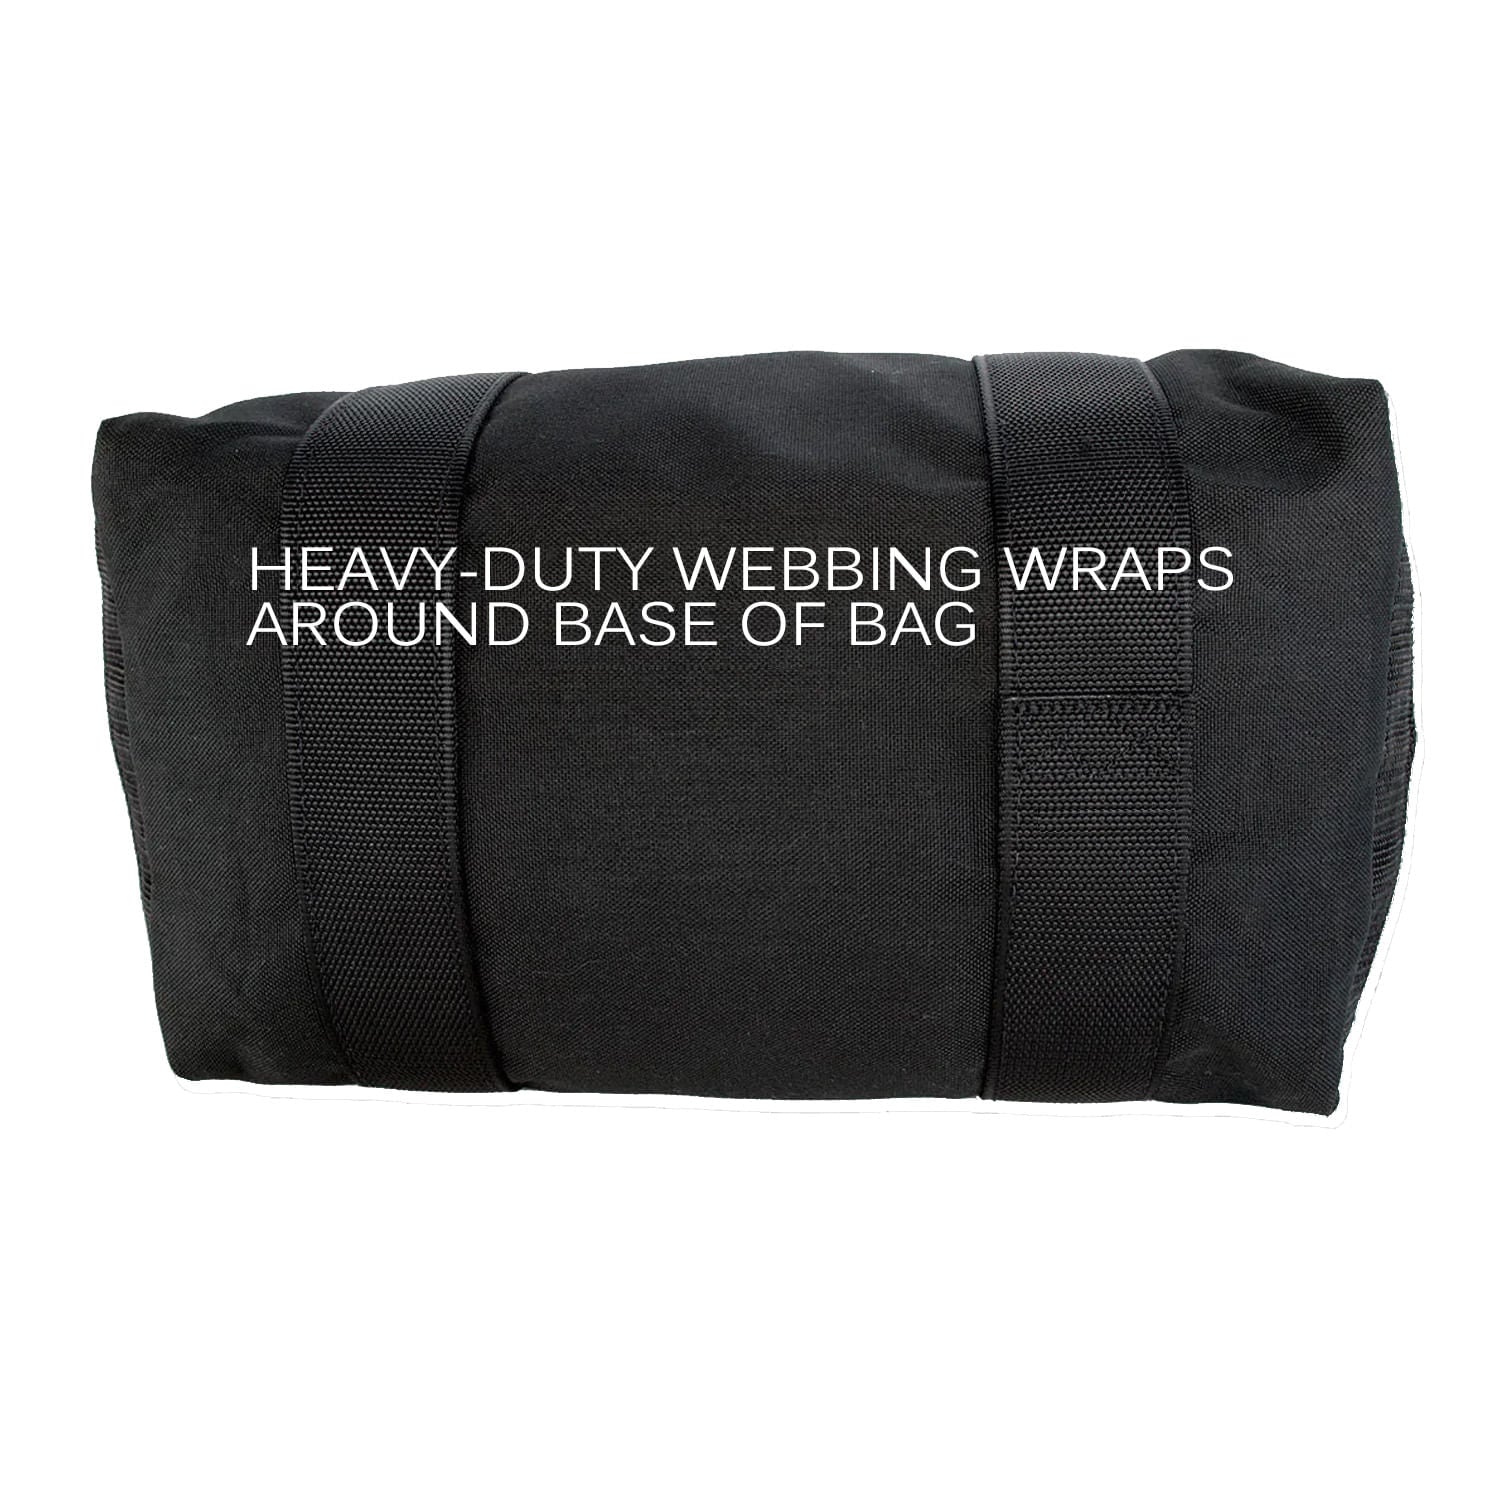 Heavy duty webbing wraps around base of bag.